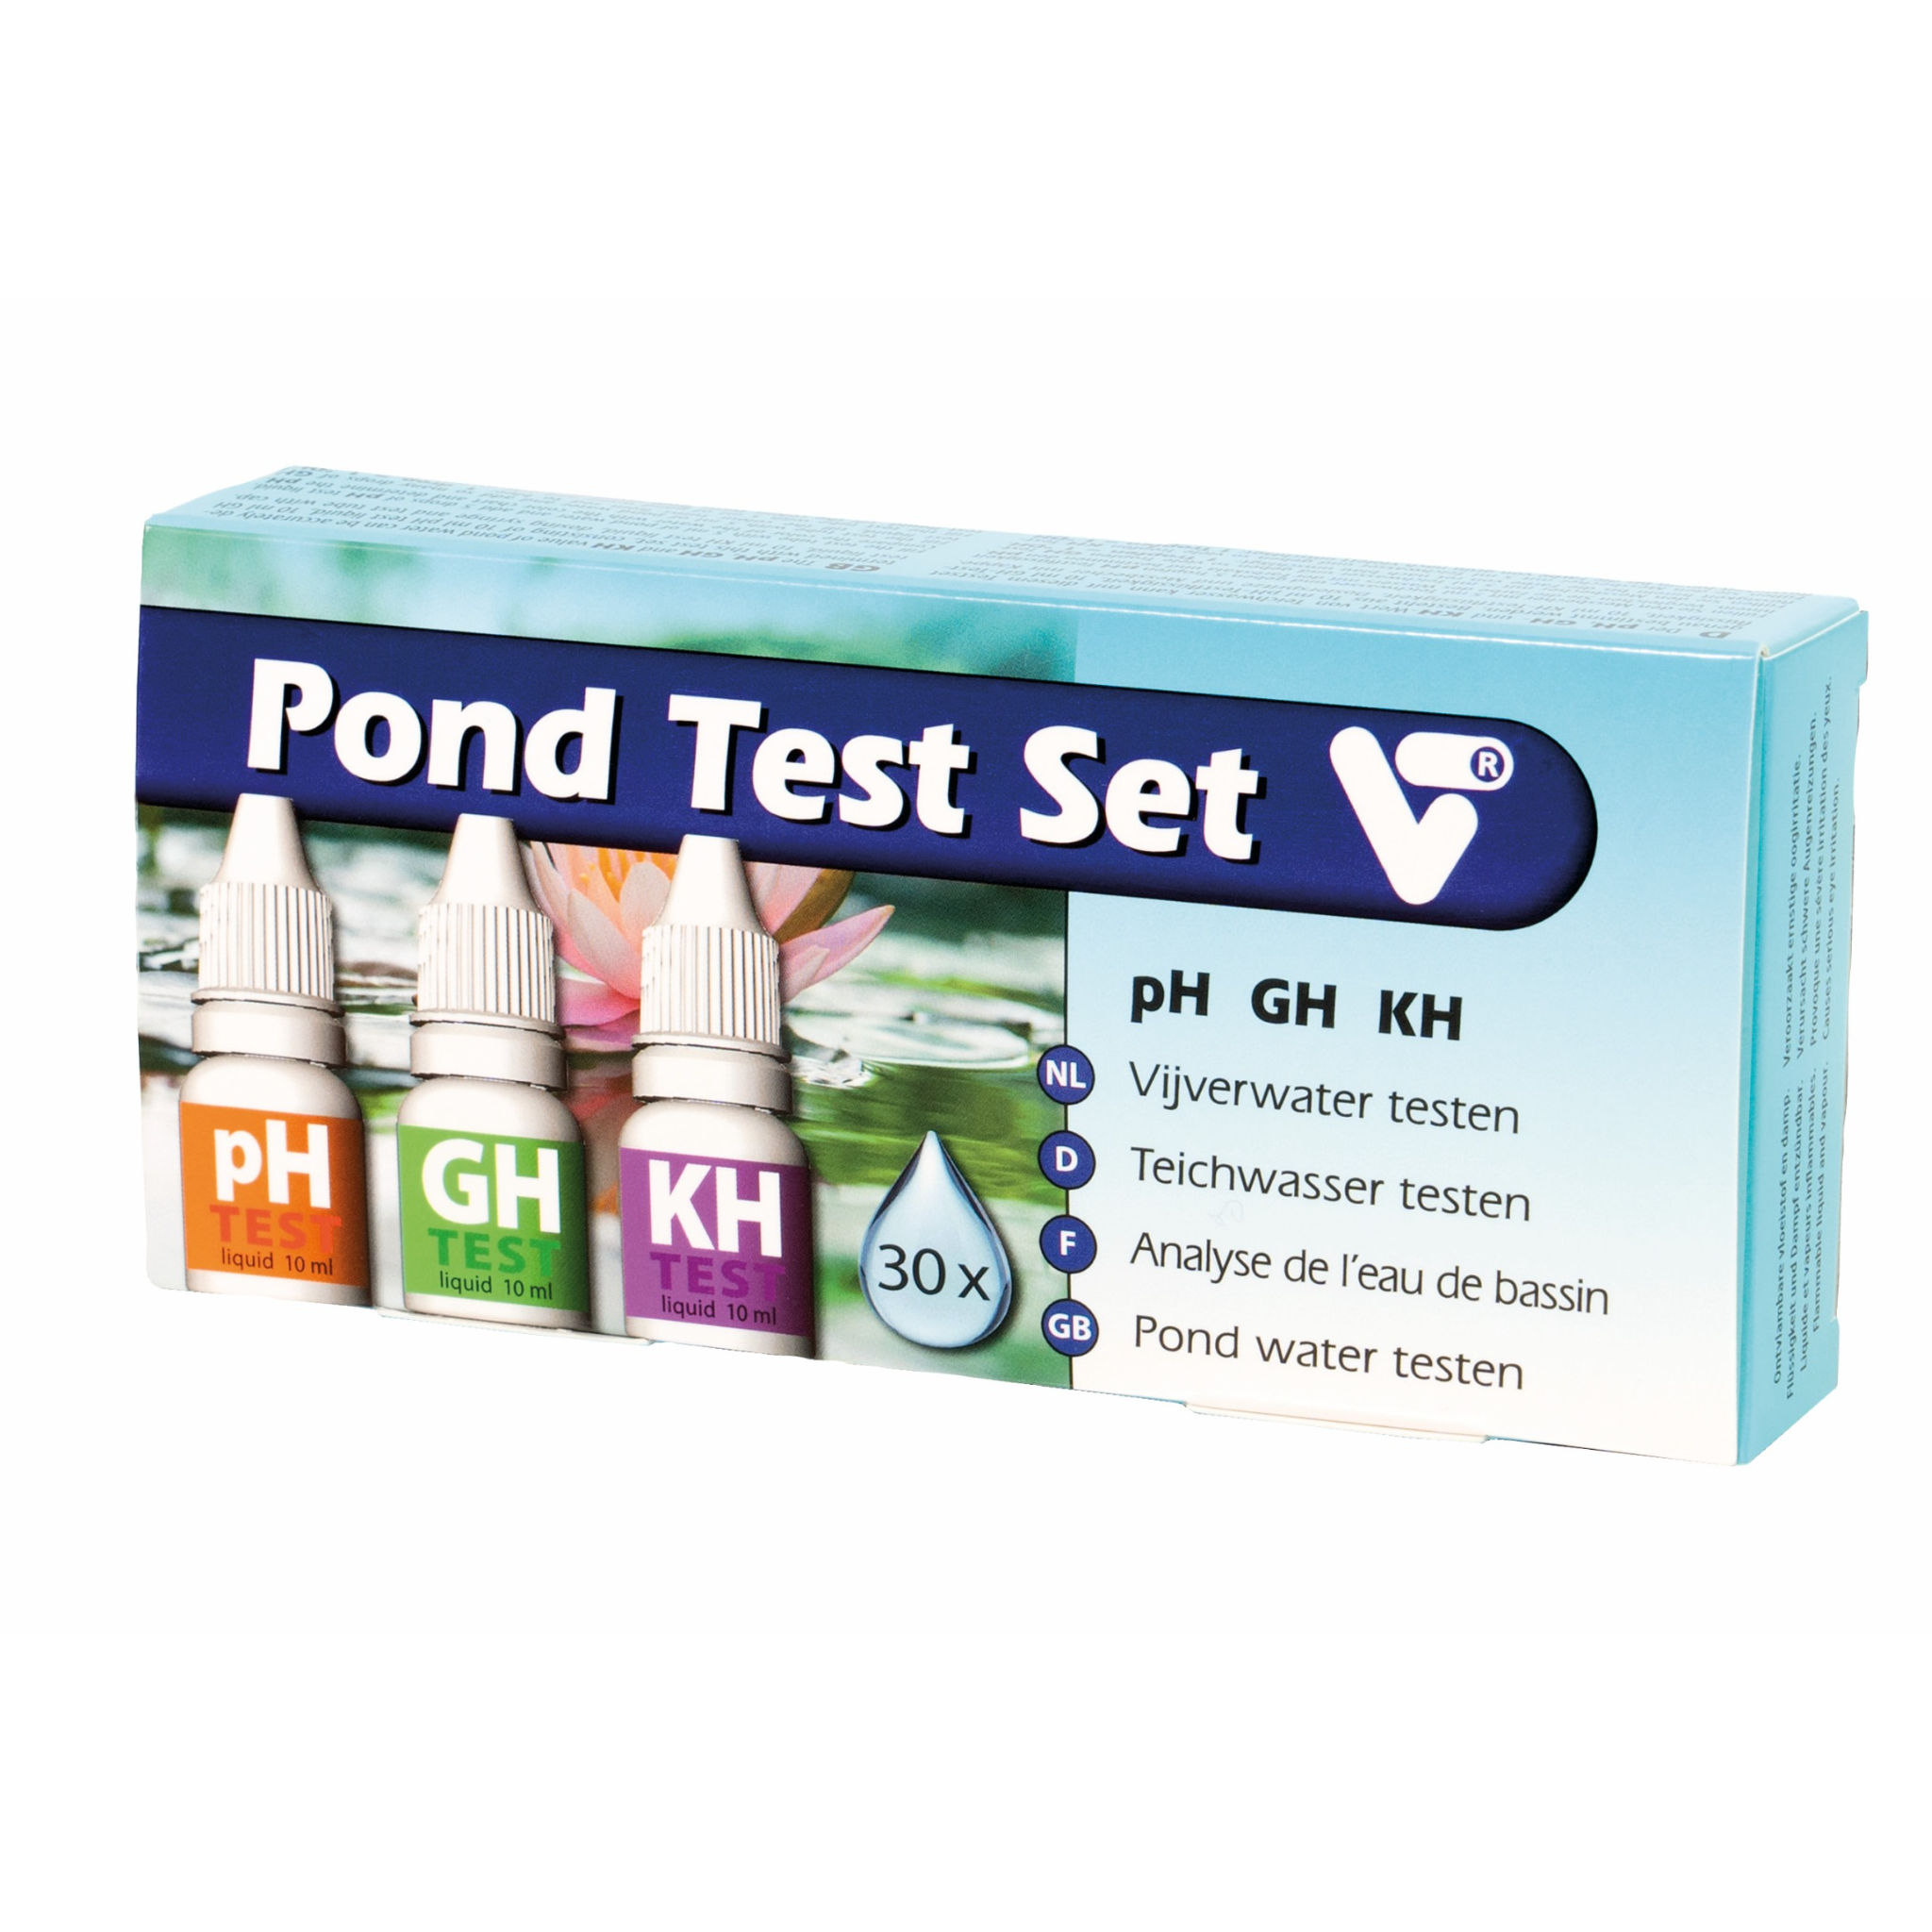 VT Pond Test Set pH/GH/KH